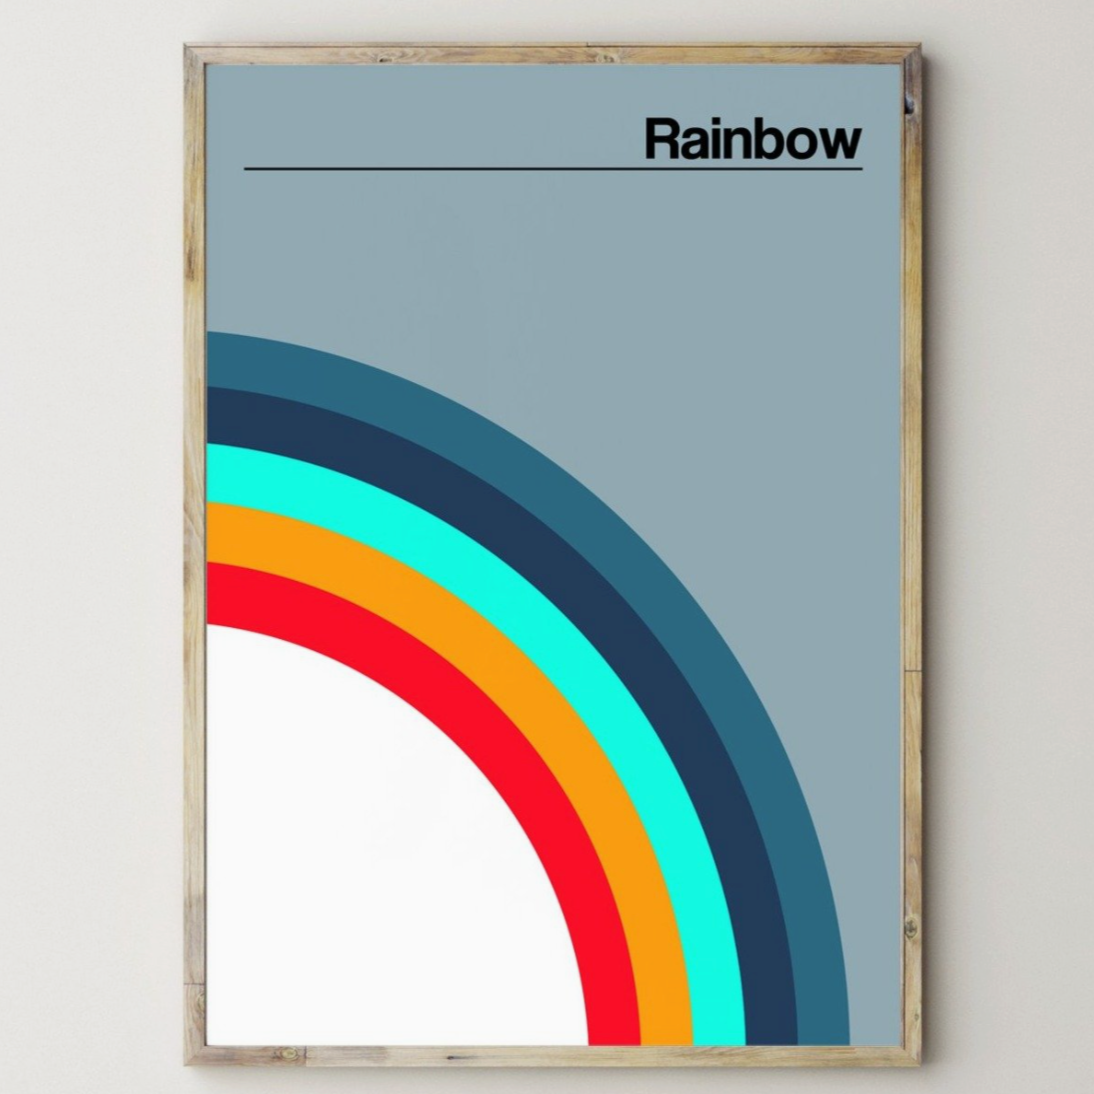 rainbow-art-print